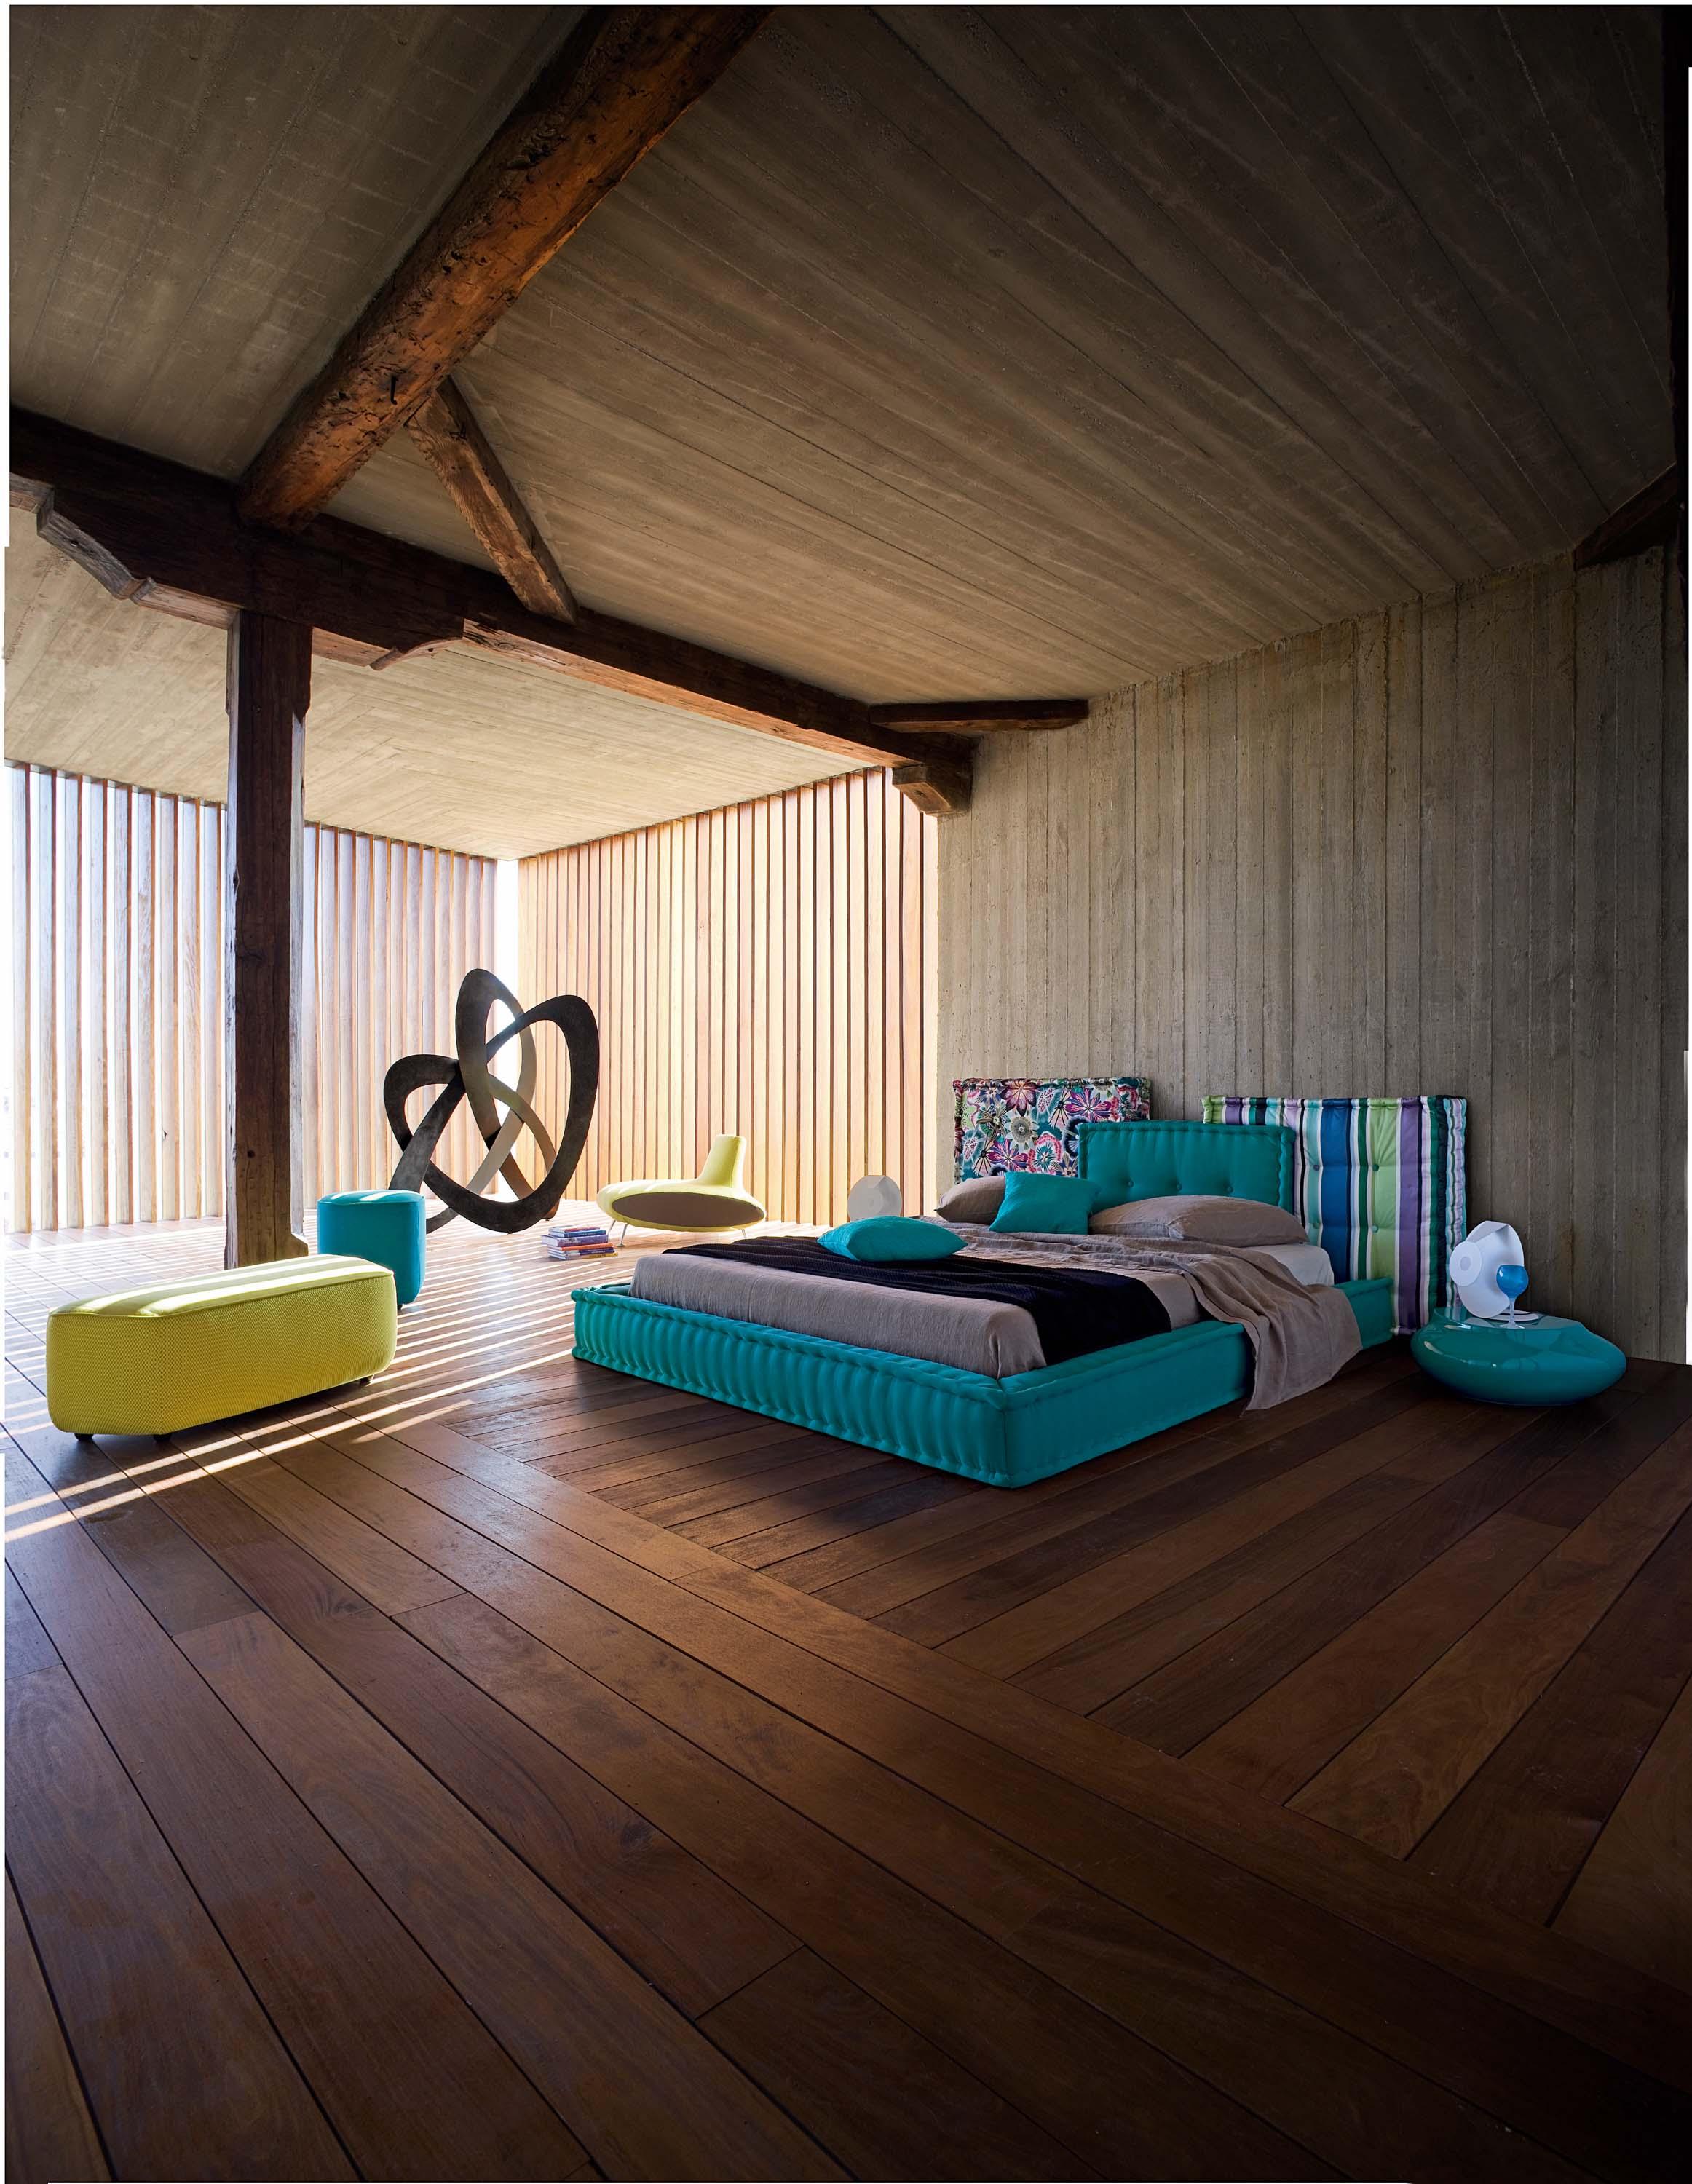 Holzverkleidung an Boden, Wand und Decke #deckenpaneel #wandverkleidung #holzbalken #holzverkleidung #wandpaneel ©Roche Bobois